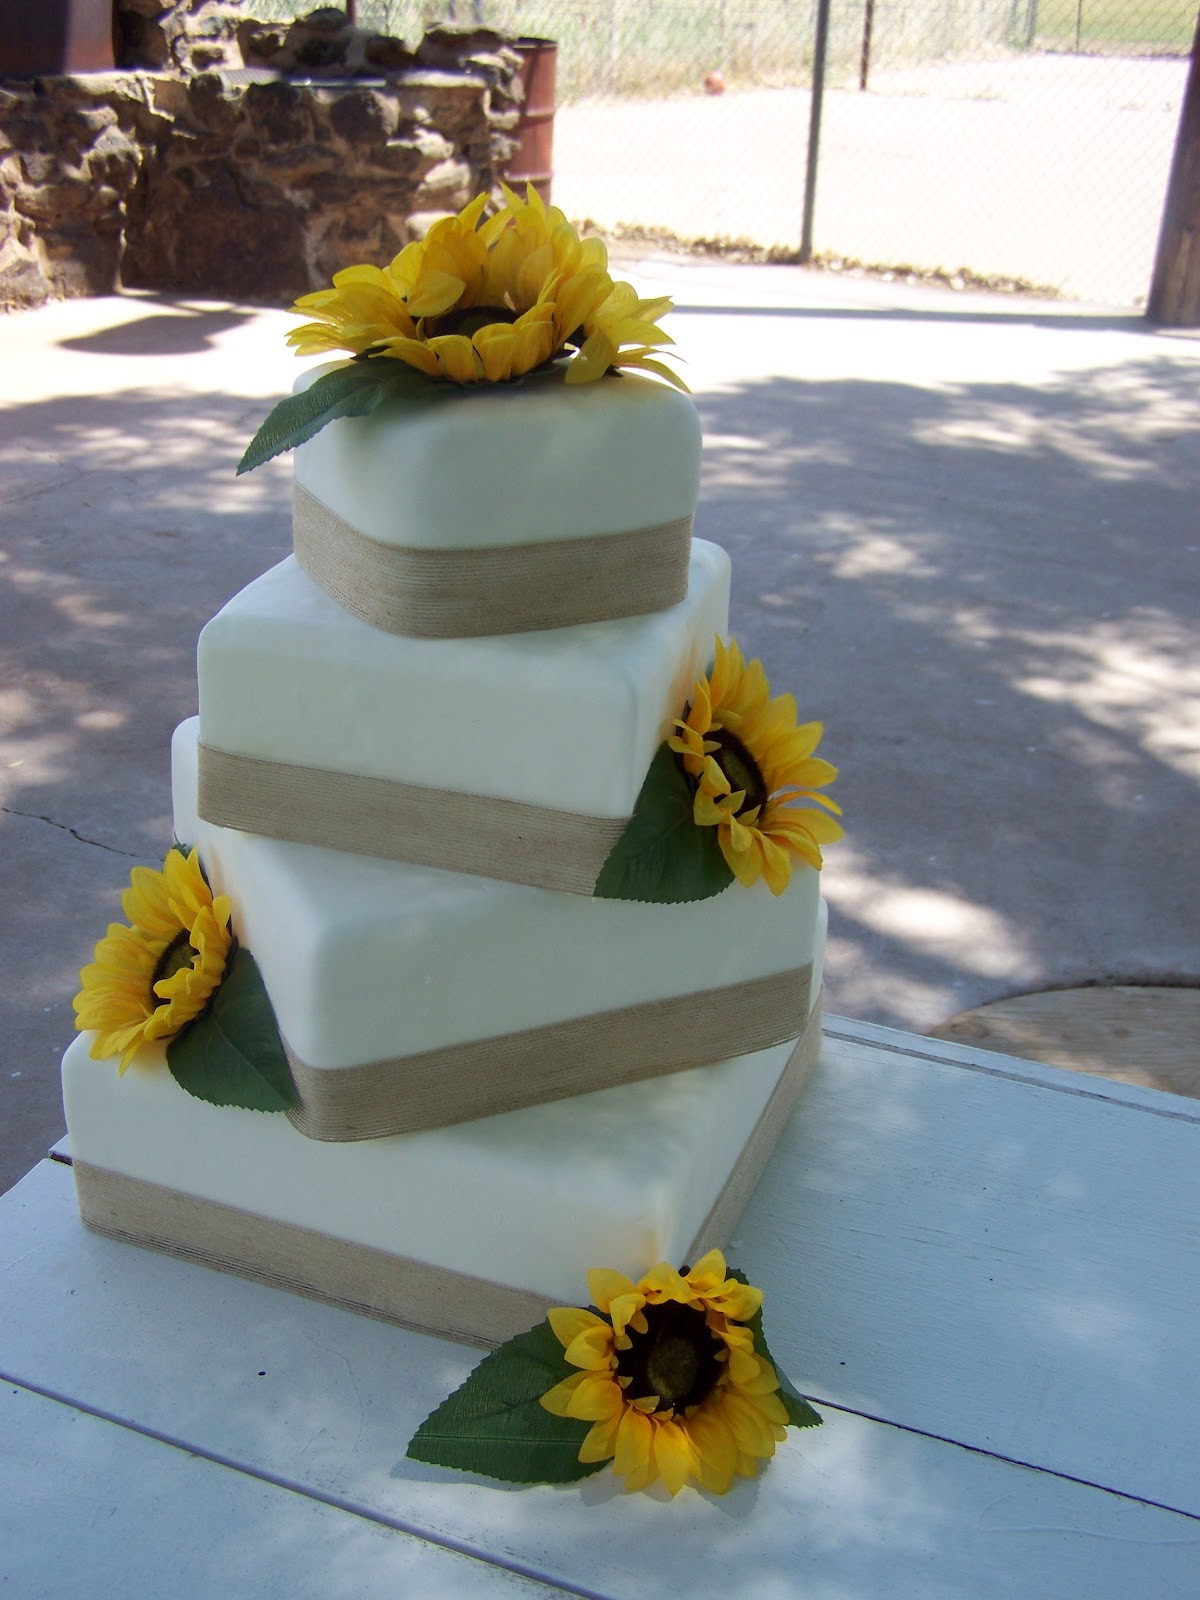 Sunflower Wedding Cakes
 Cake A Licious Sunflower & Burlap Wedding Cake